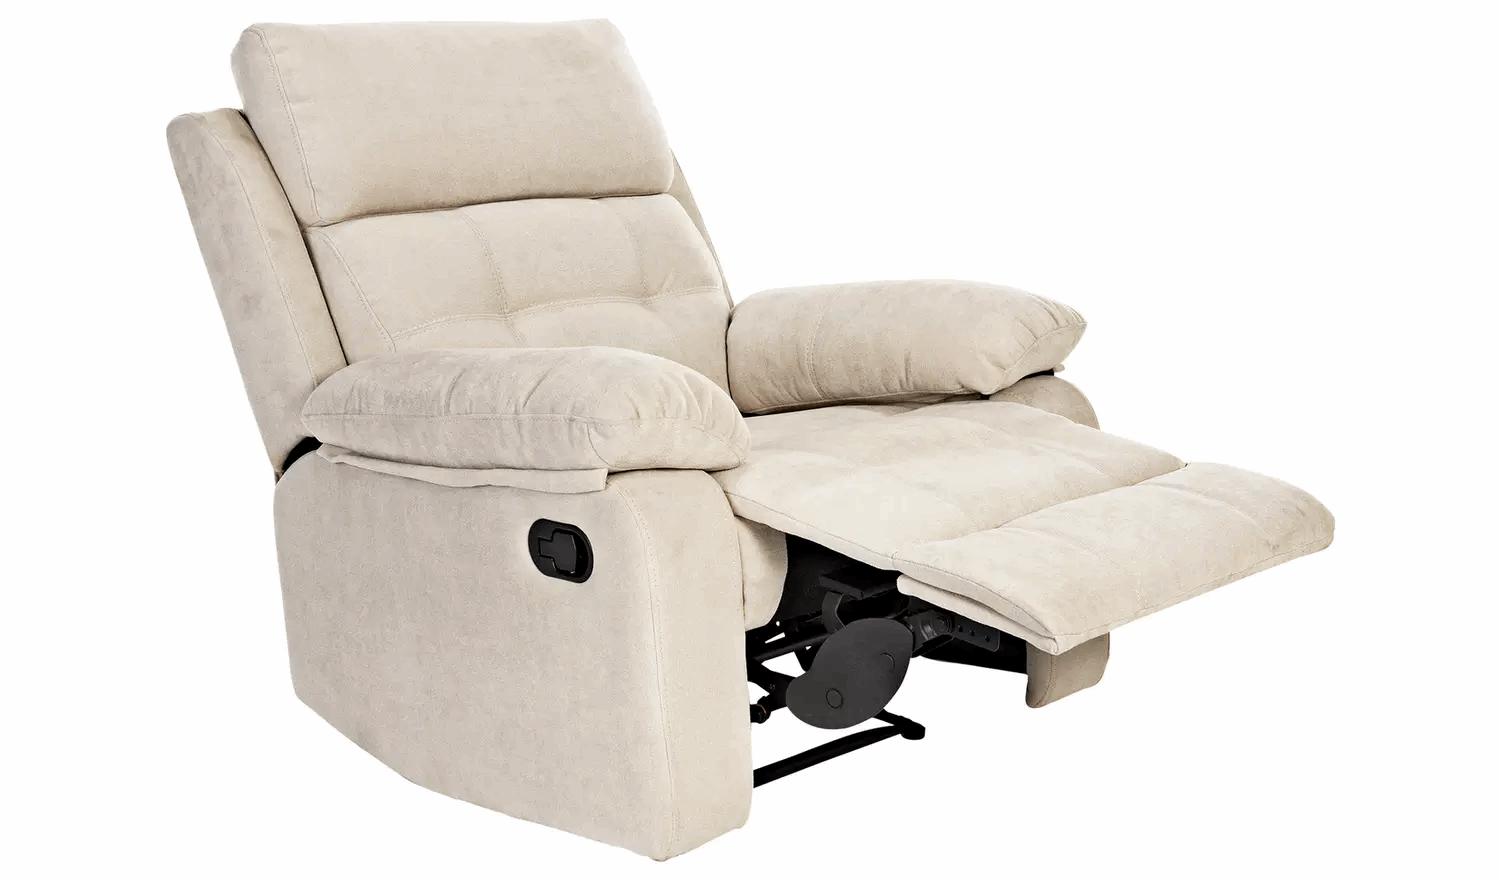 Home June Fabric Manual Recliner Chair - Natural